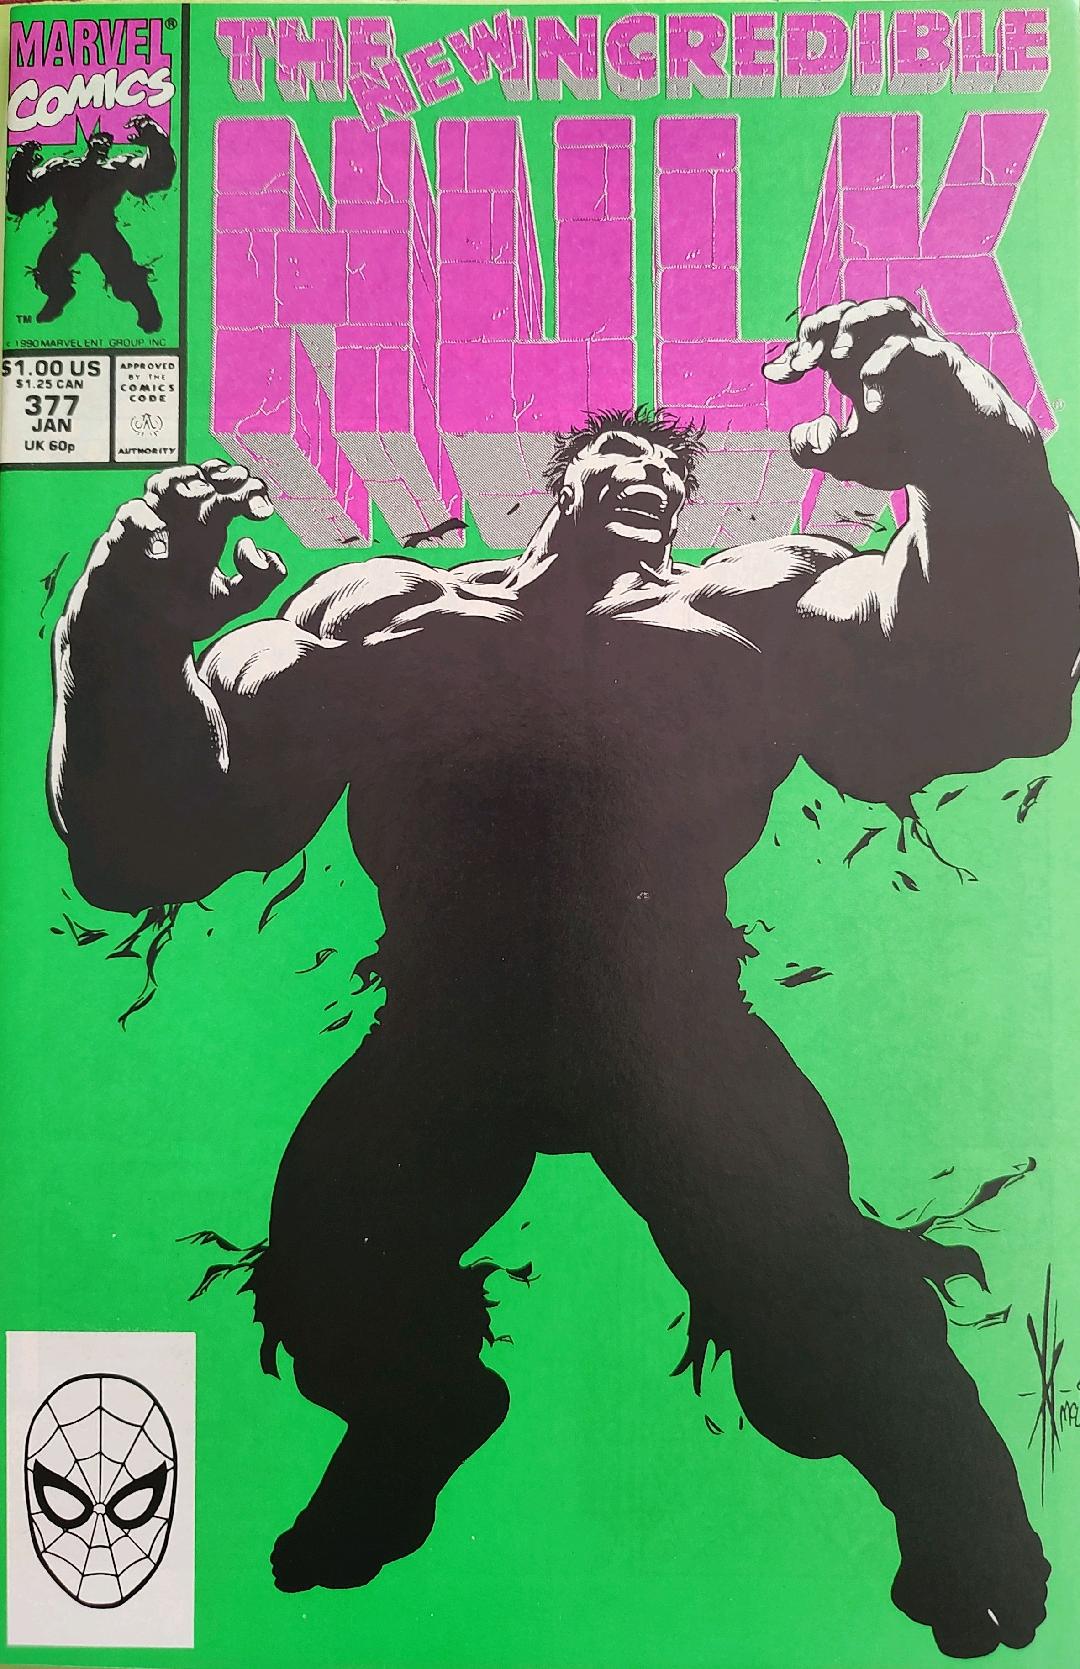 The Incredible Hulk #377 Comic Book Cover